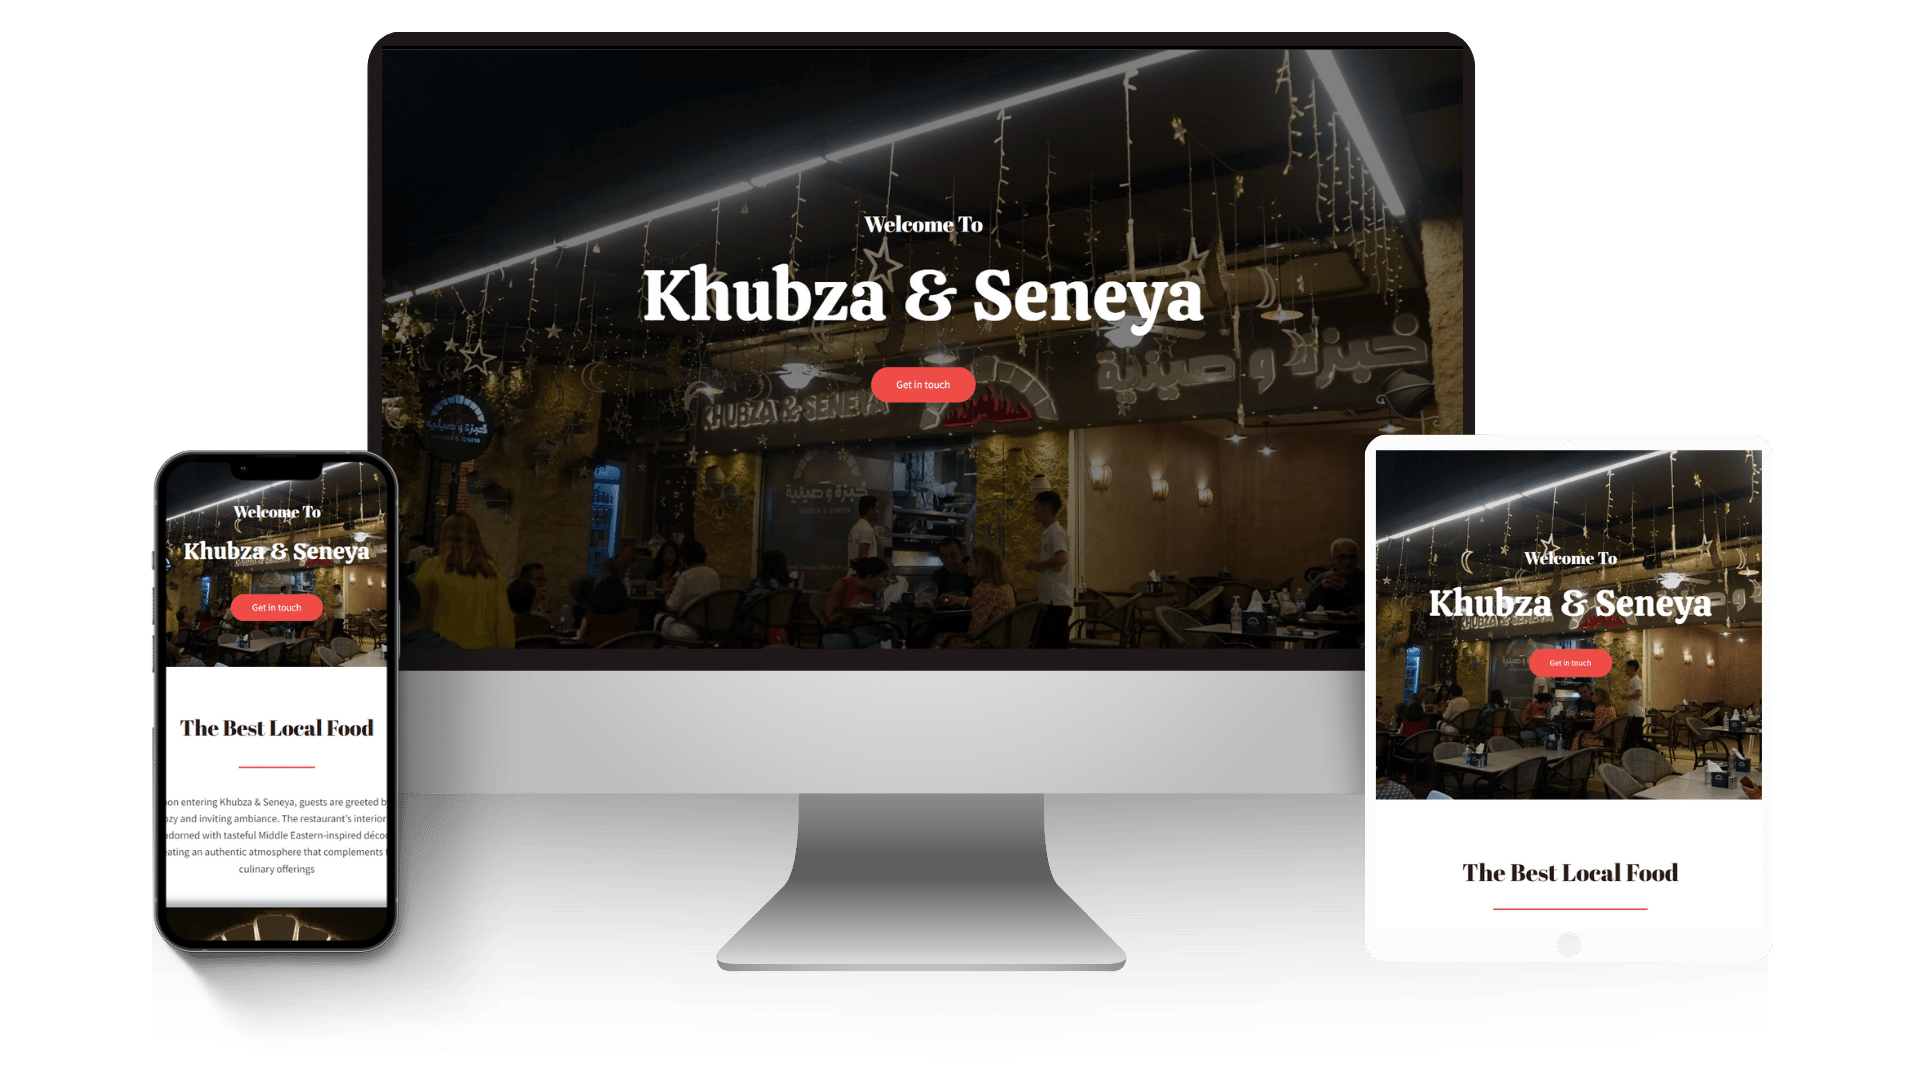 Khubza & Seneya Restaurant website mockup